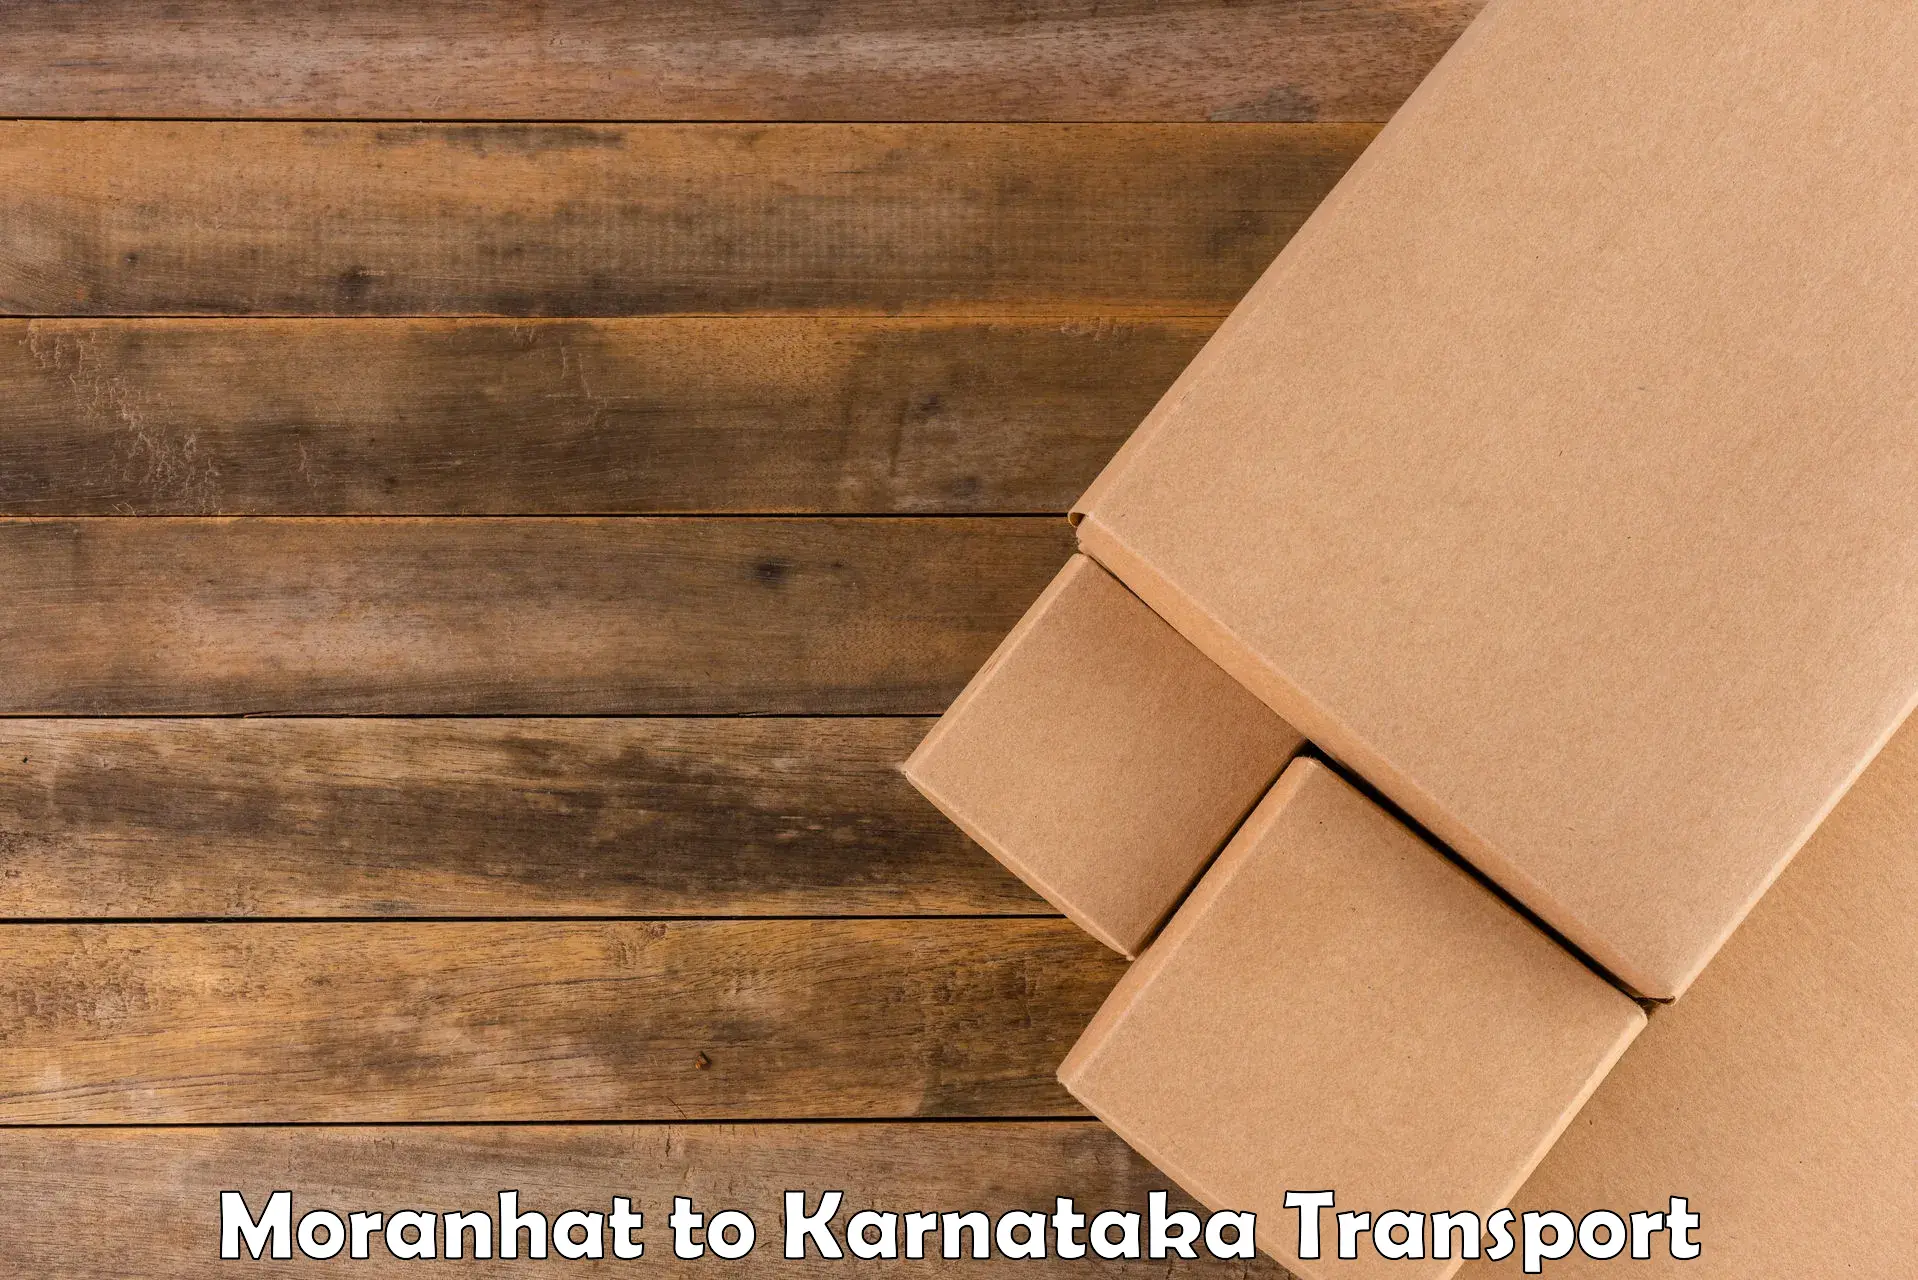 Cycle transportation service Moranhat to Mangalore Port